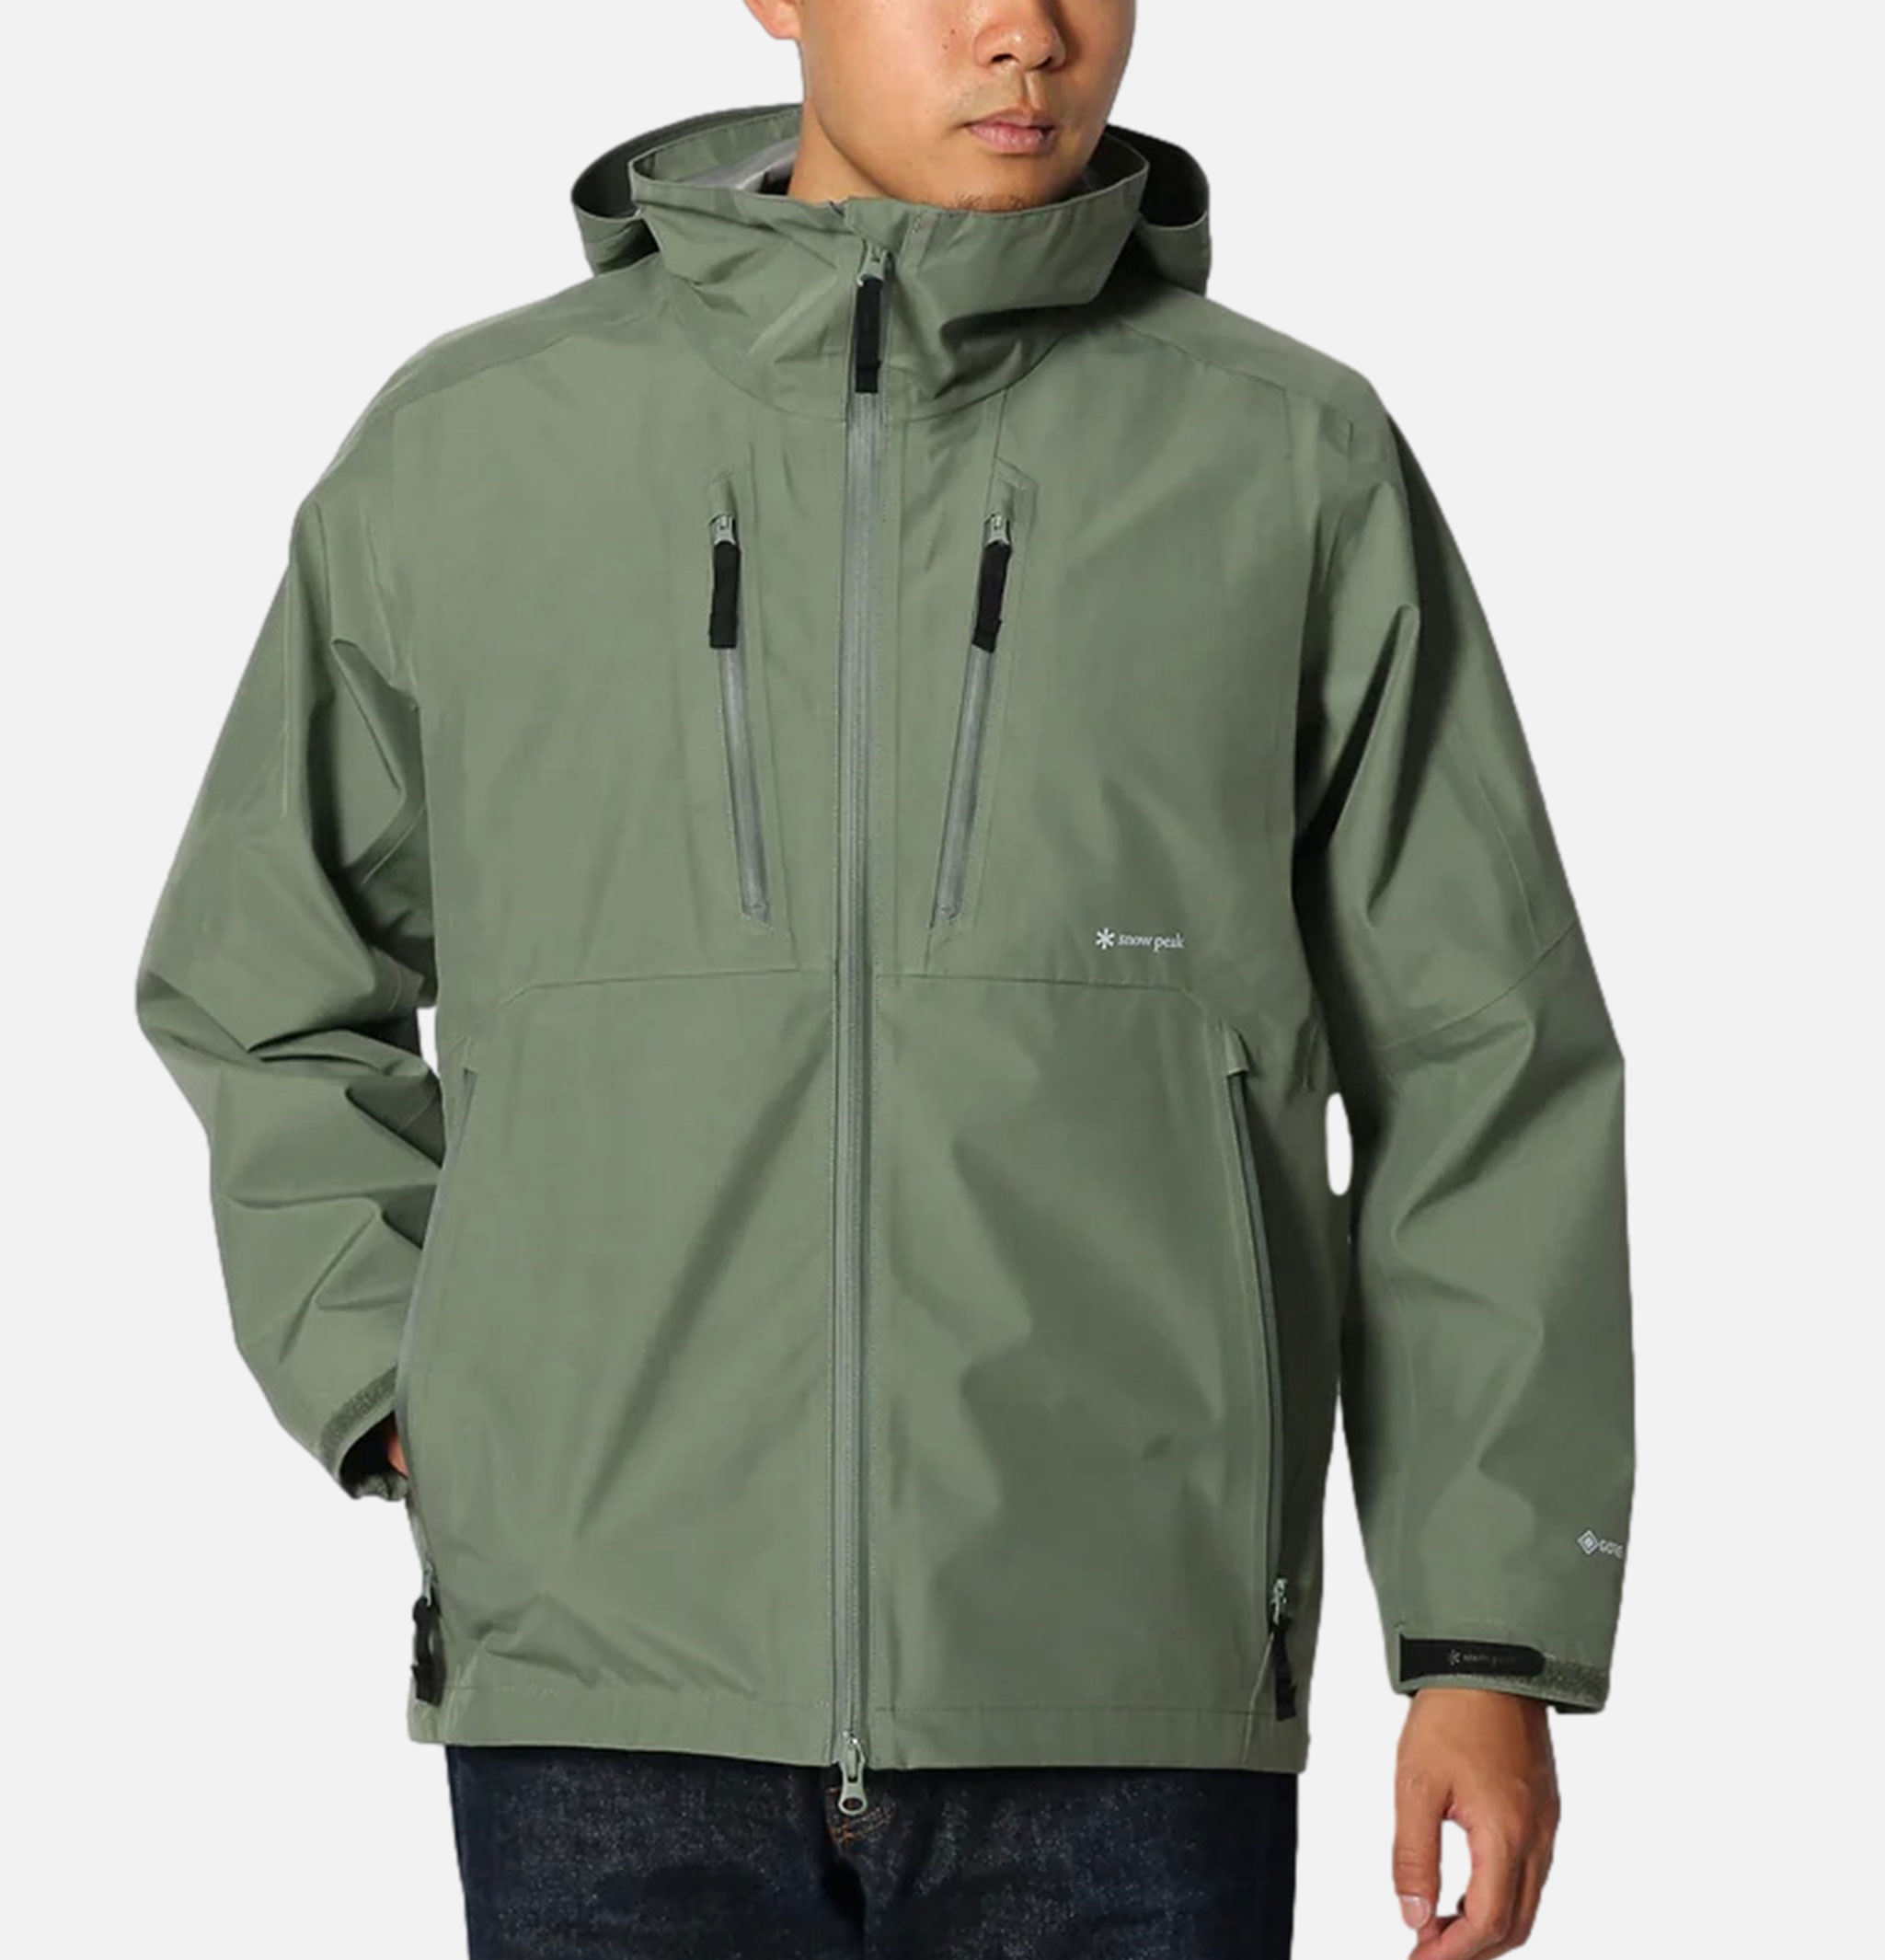 GORE-TEX Snow Peak Foliage rain jacket